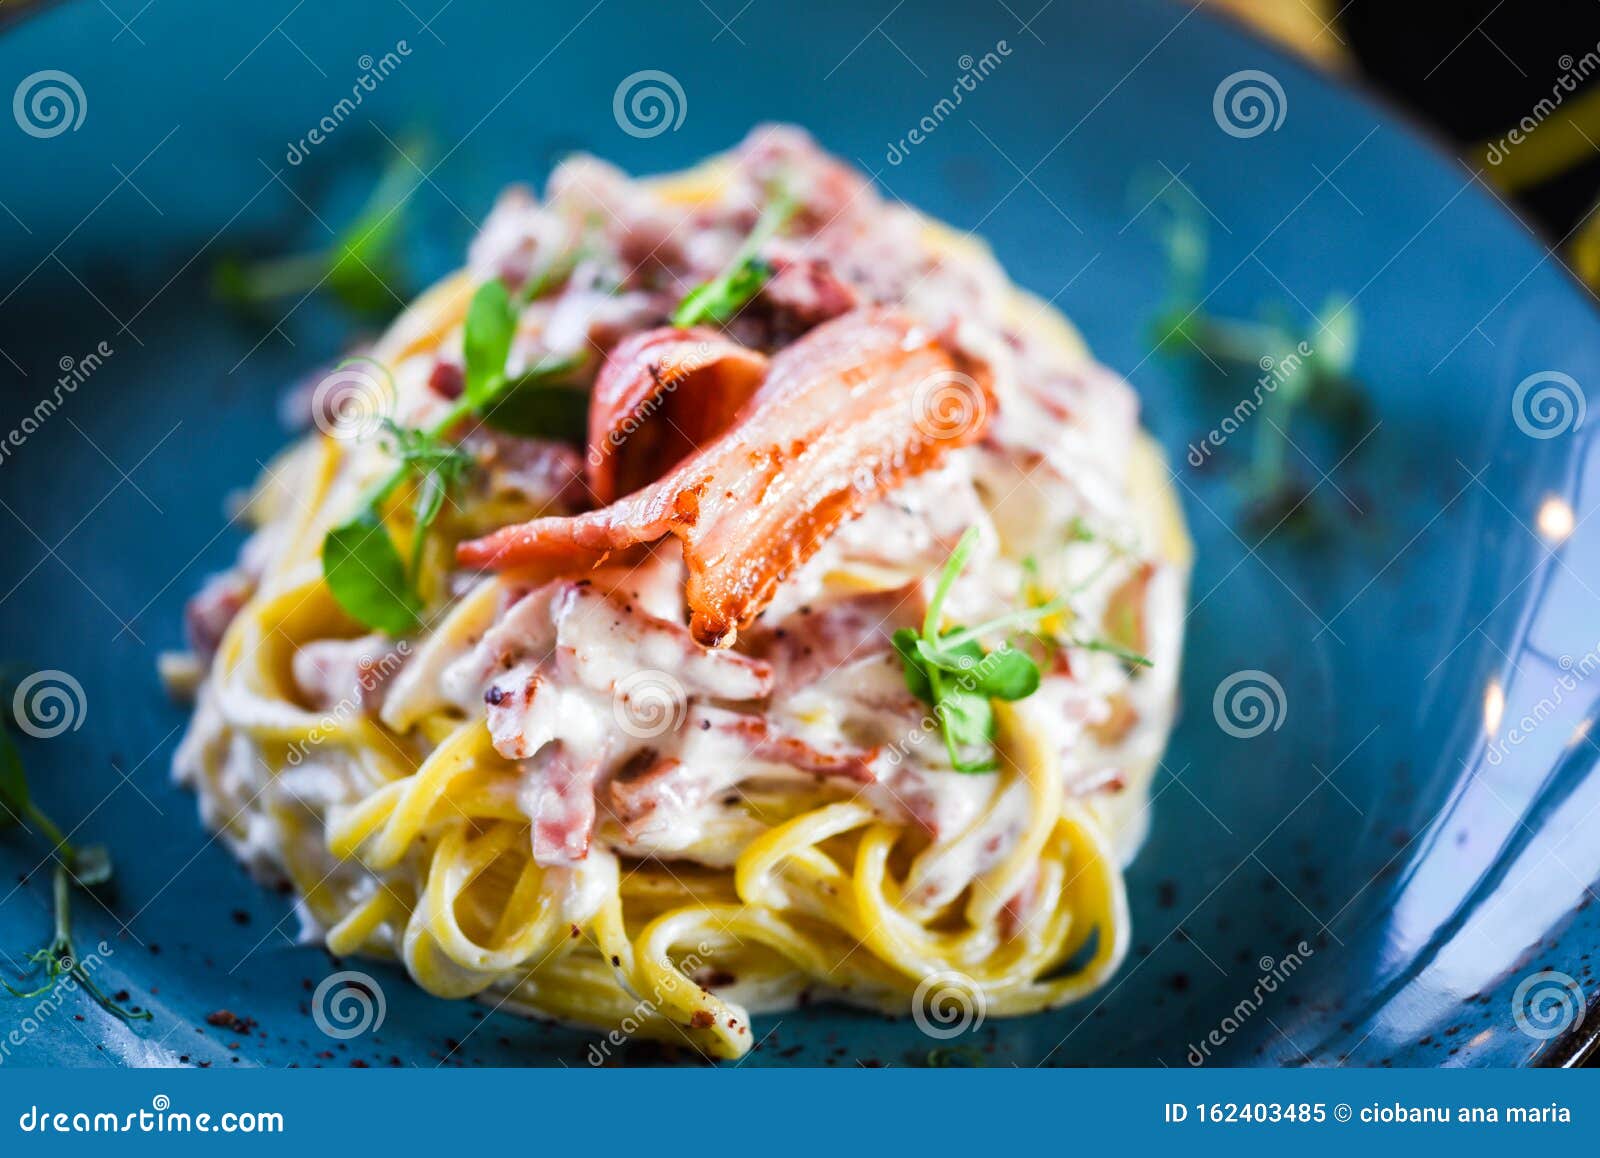 Tasty Fresh Italian Spaghetti Carbonara with Delicious Ingredients ...